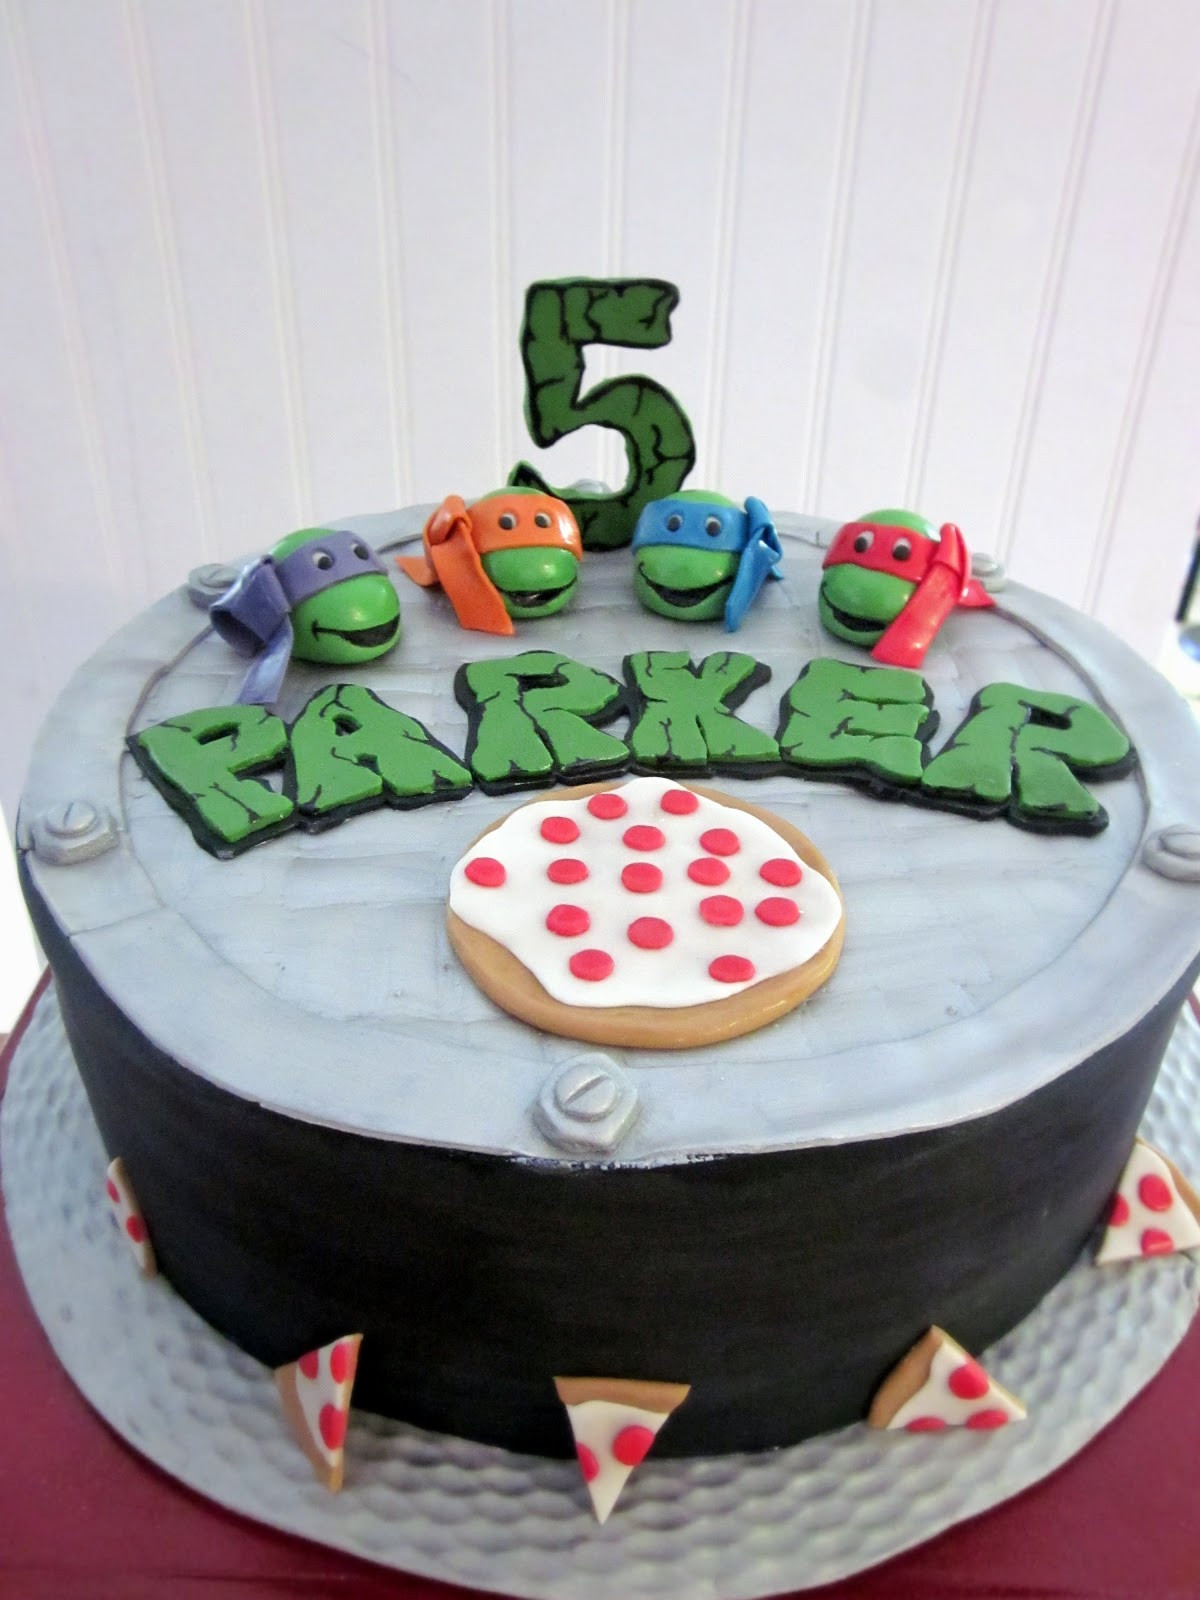 Ninja Turtles Birthday Cake
 Darlin Designs Teenage Mutant Ninja Turtle Birthday Cake